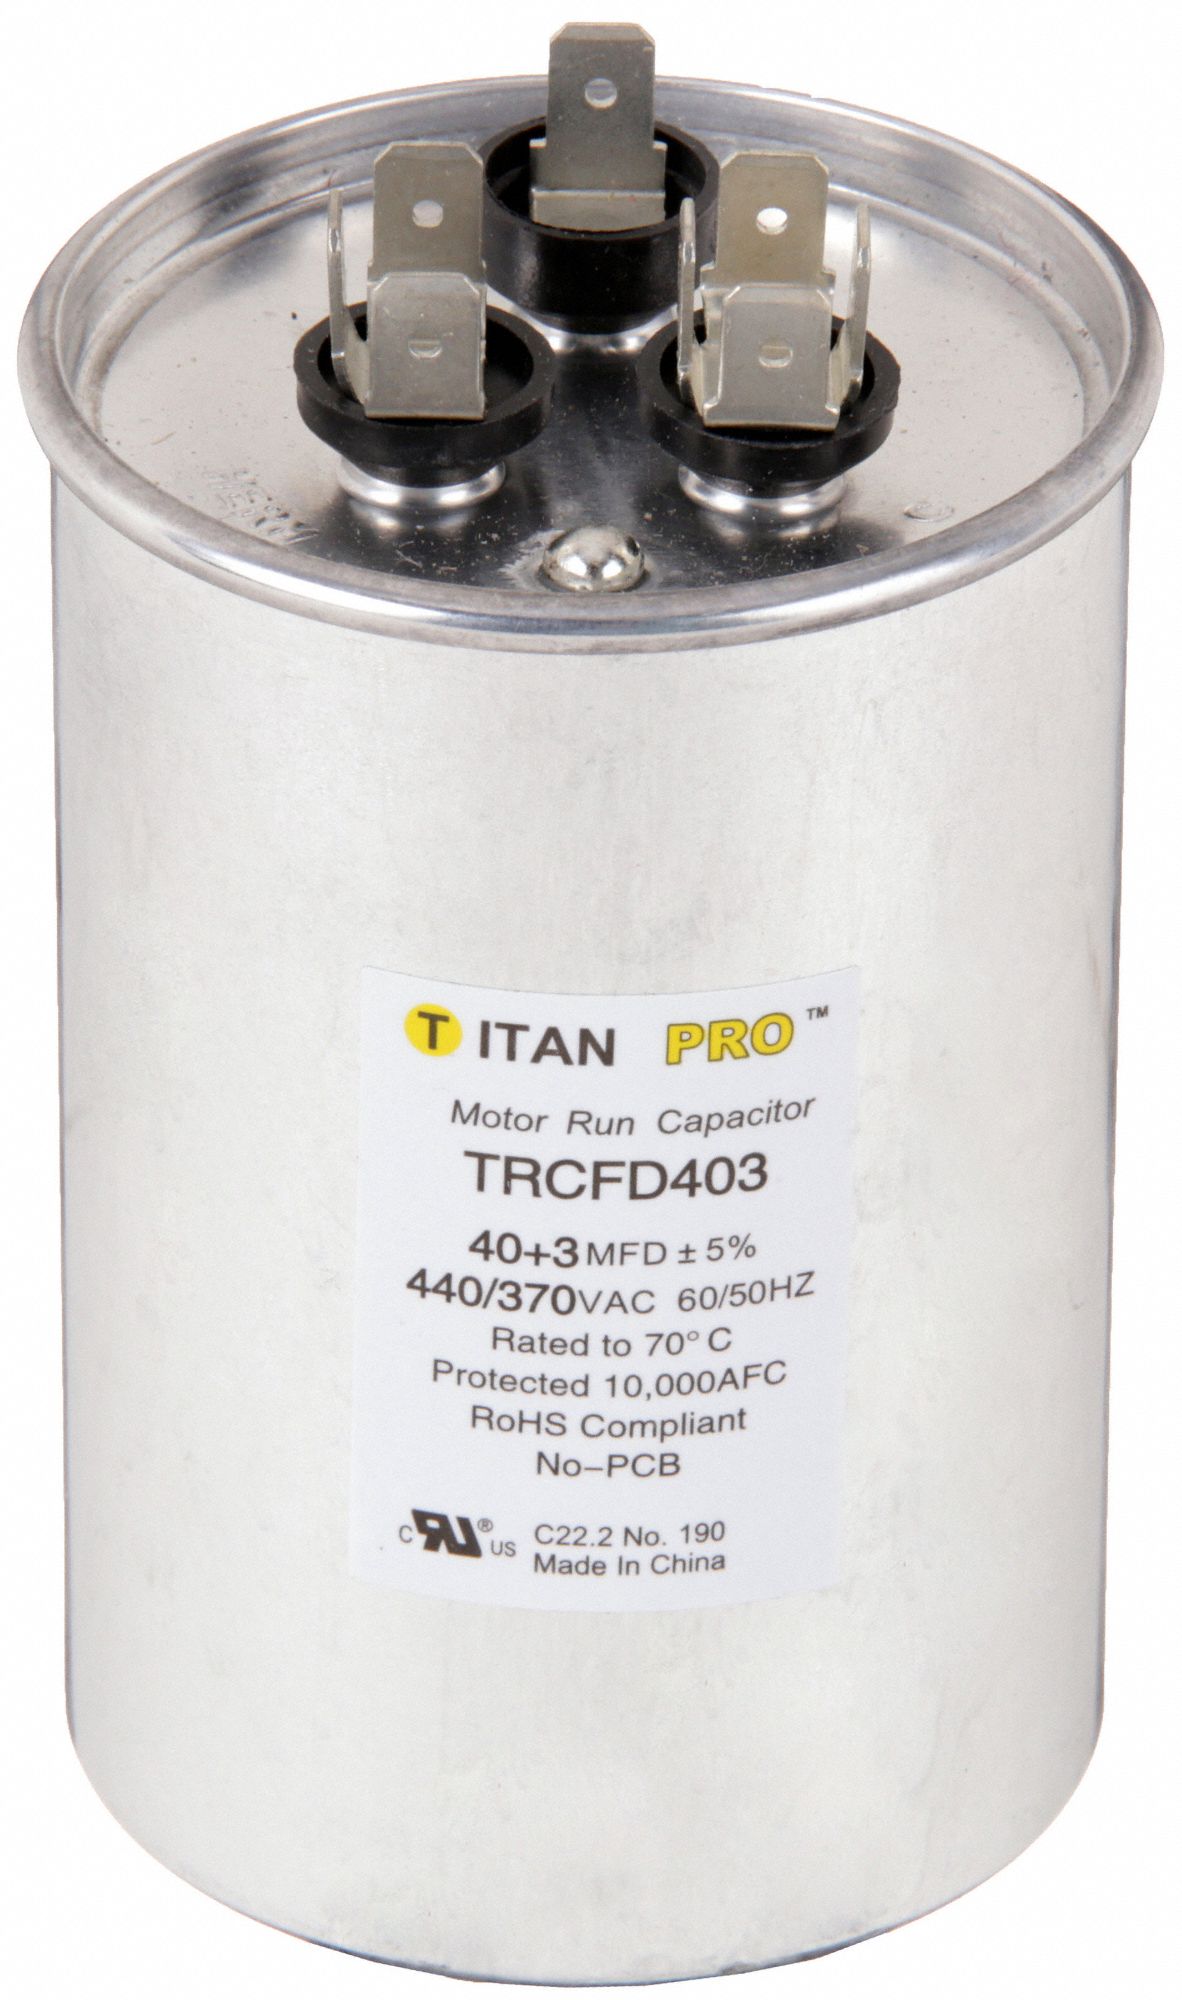 Introducing Titan FX - Multi-Rated Run Capacitors!!!